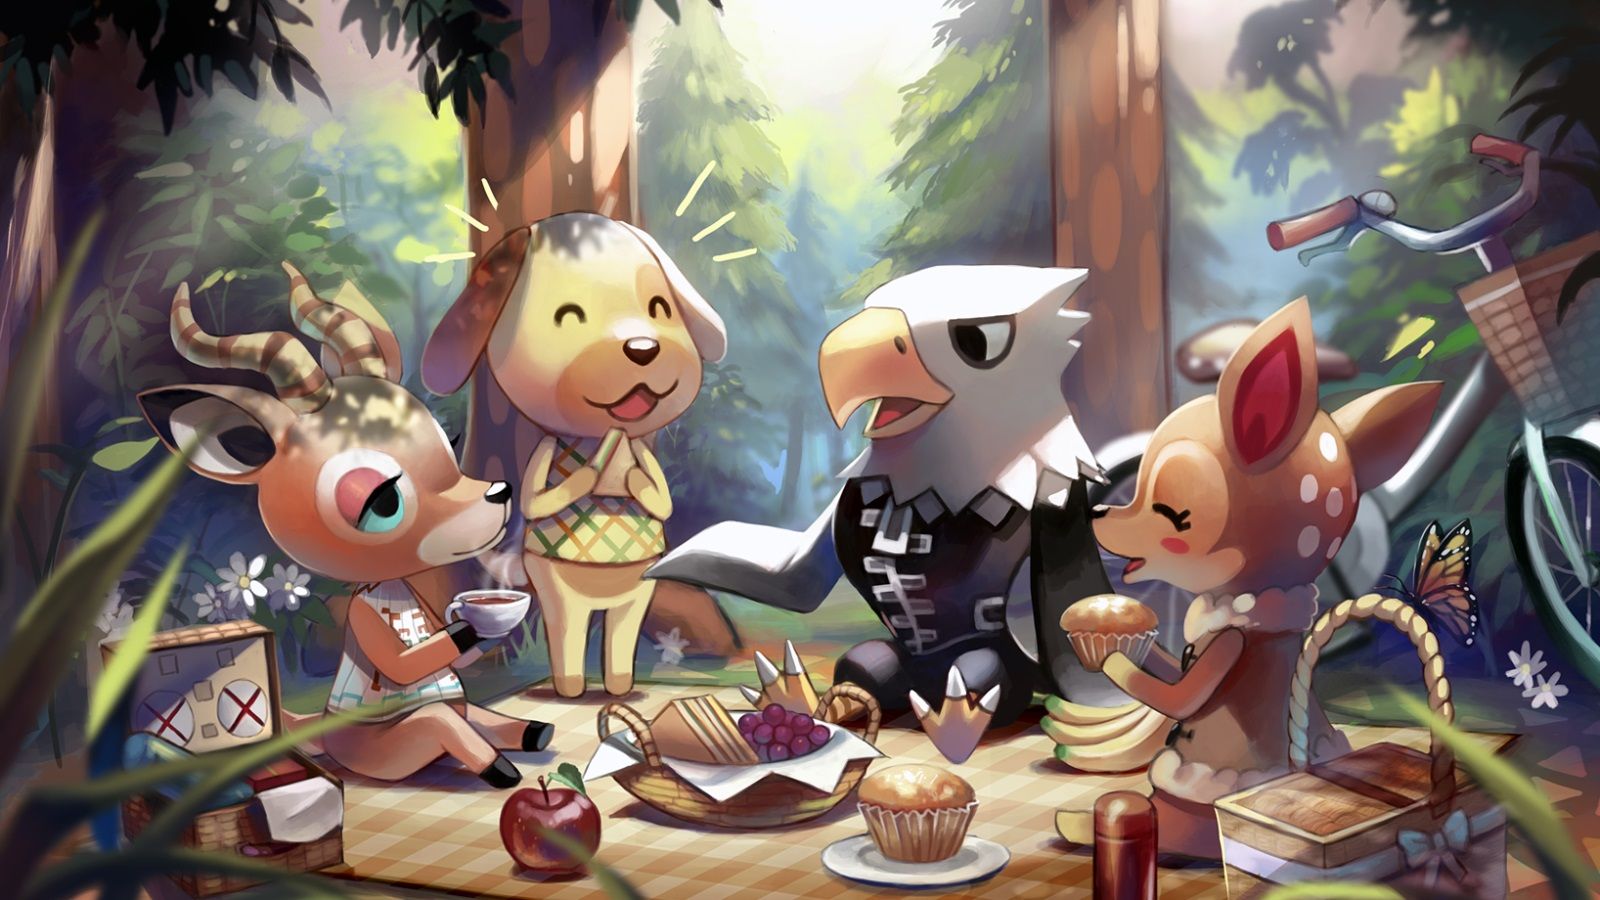 The legend of zelda artwork with animals - Animal Crossing